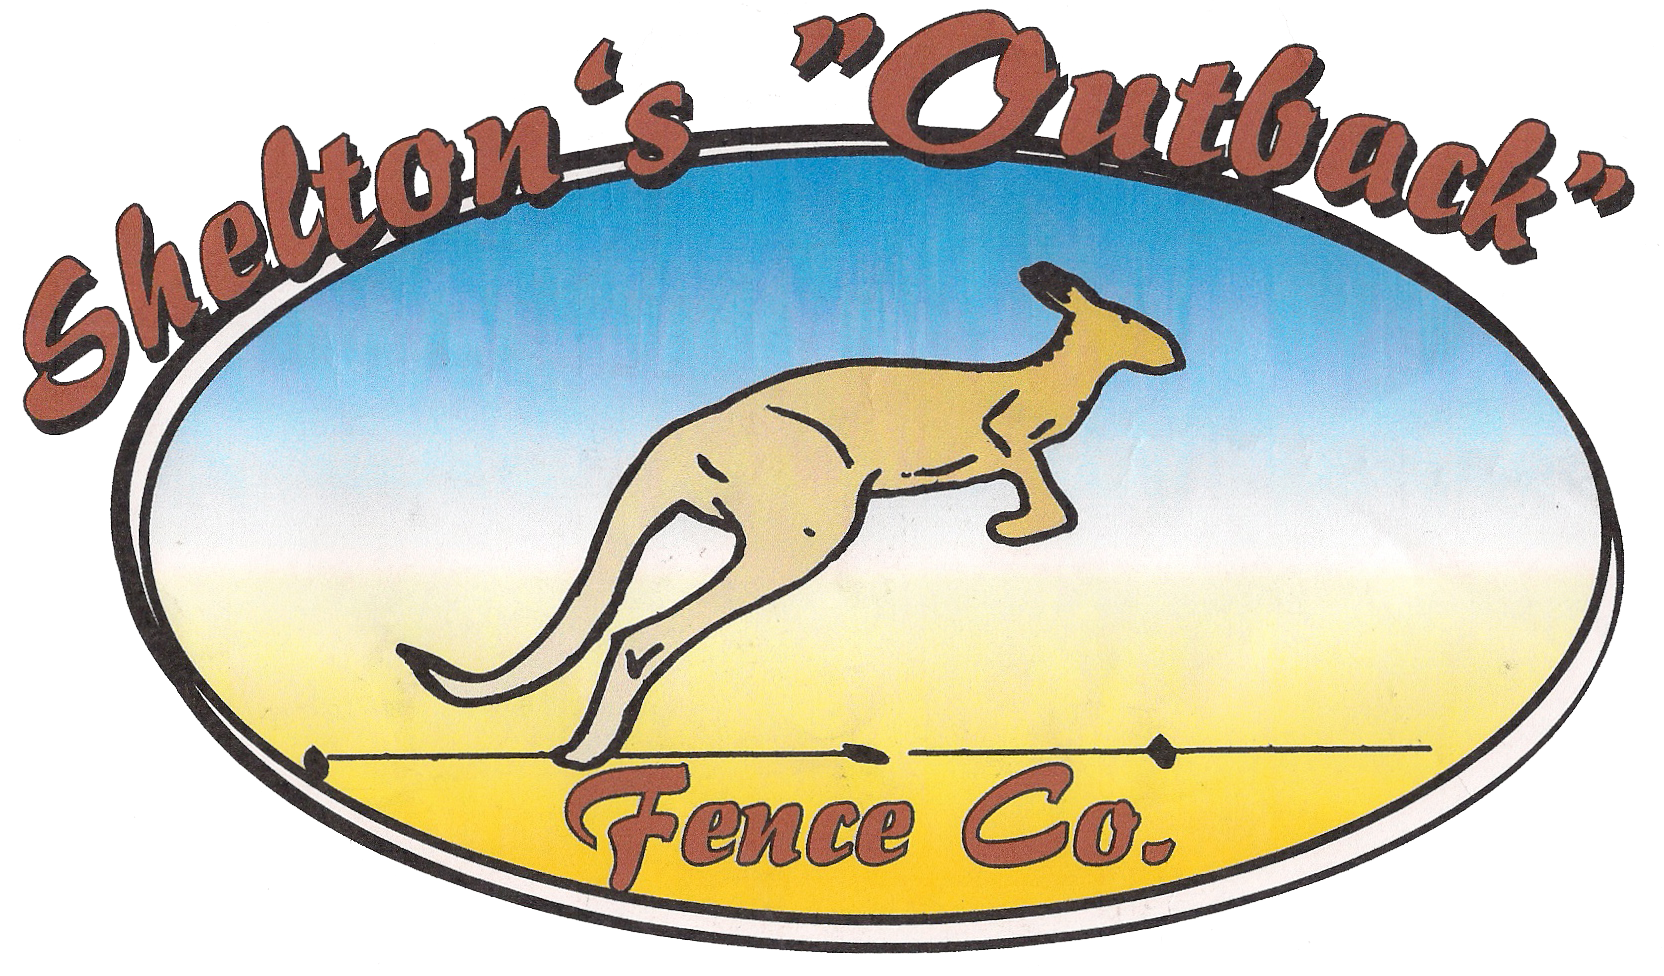 Shelton’s Outback Fence Co